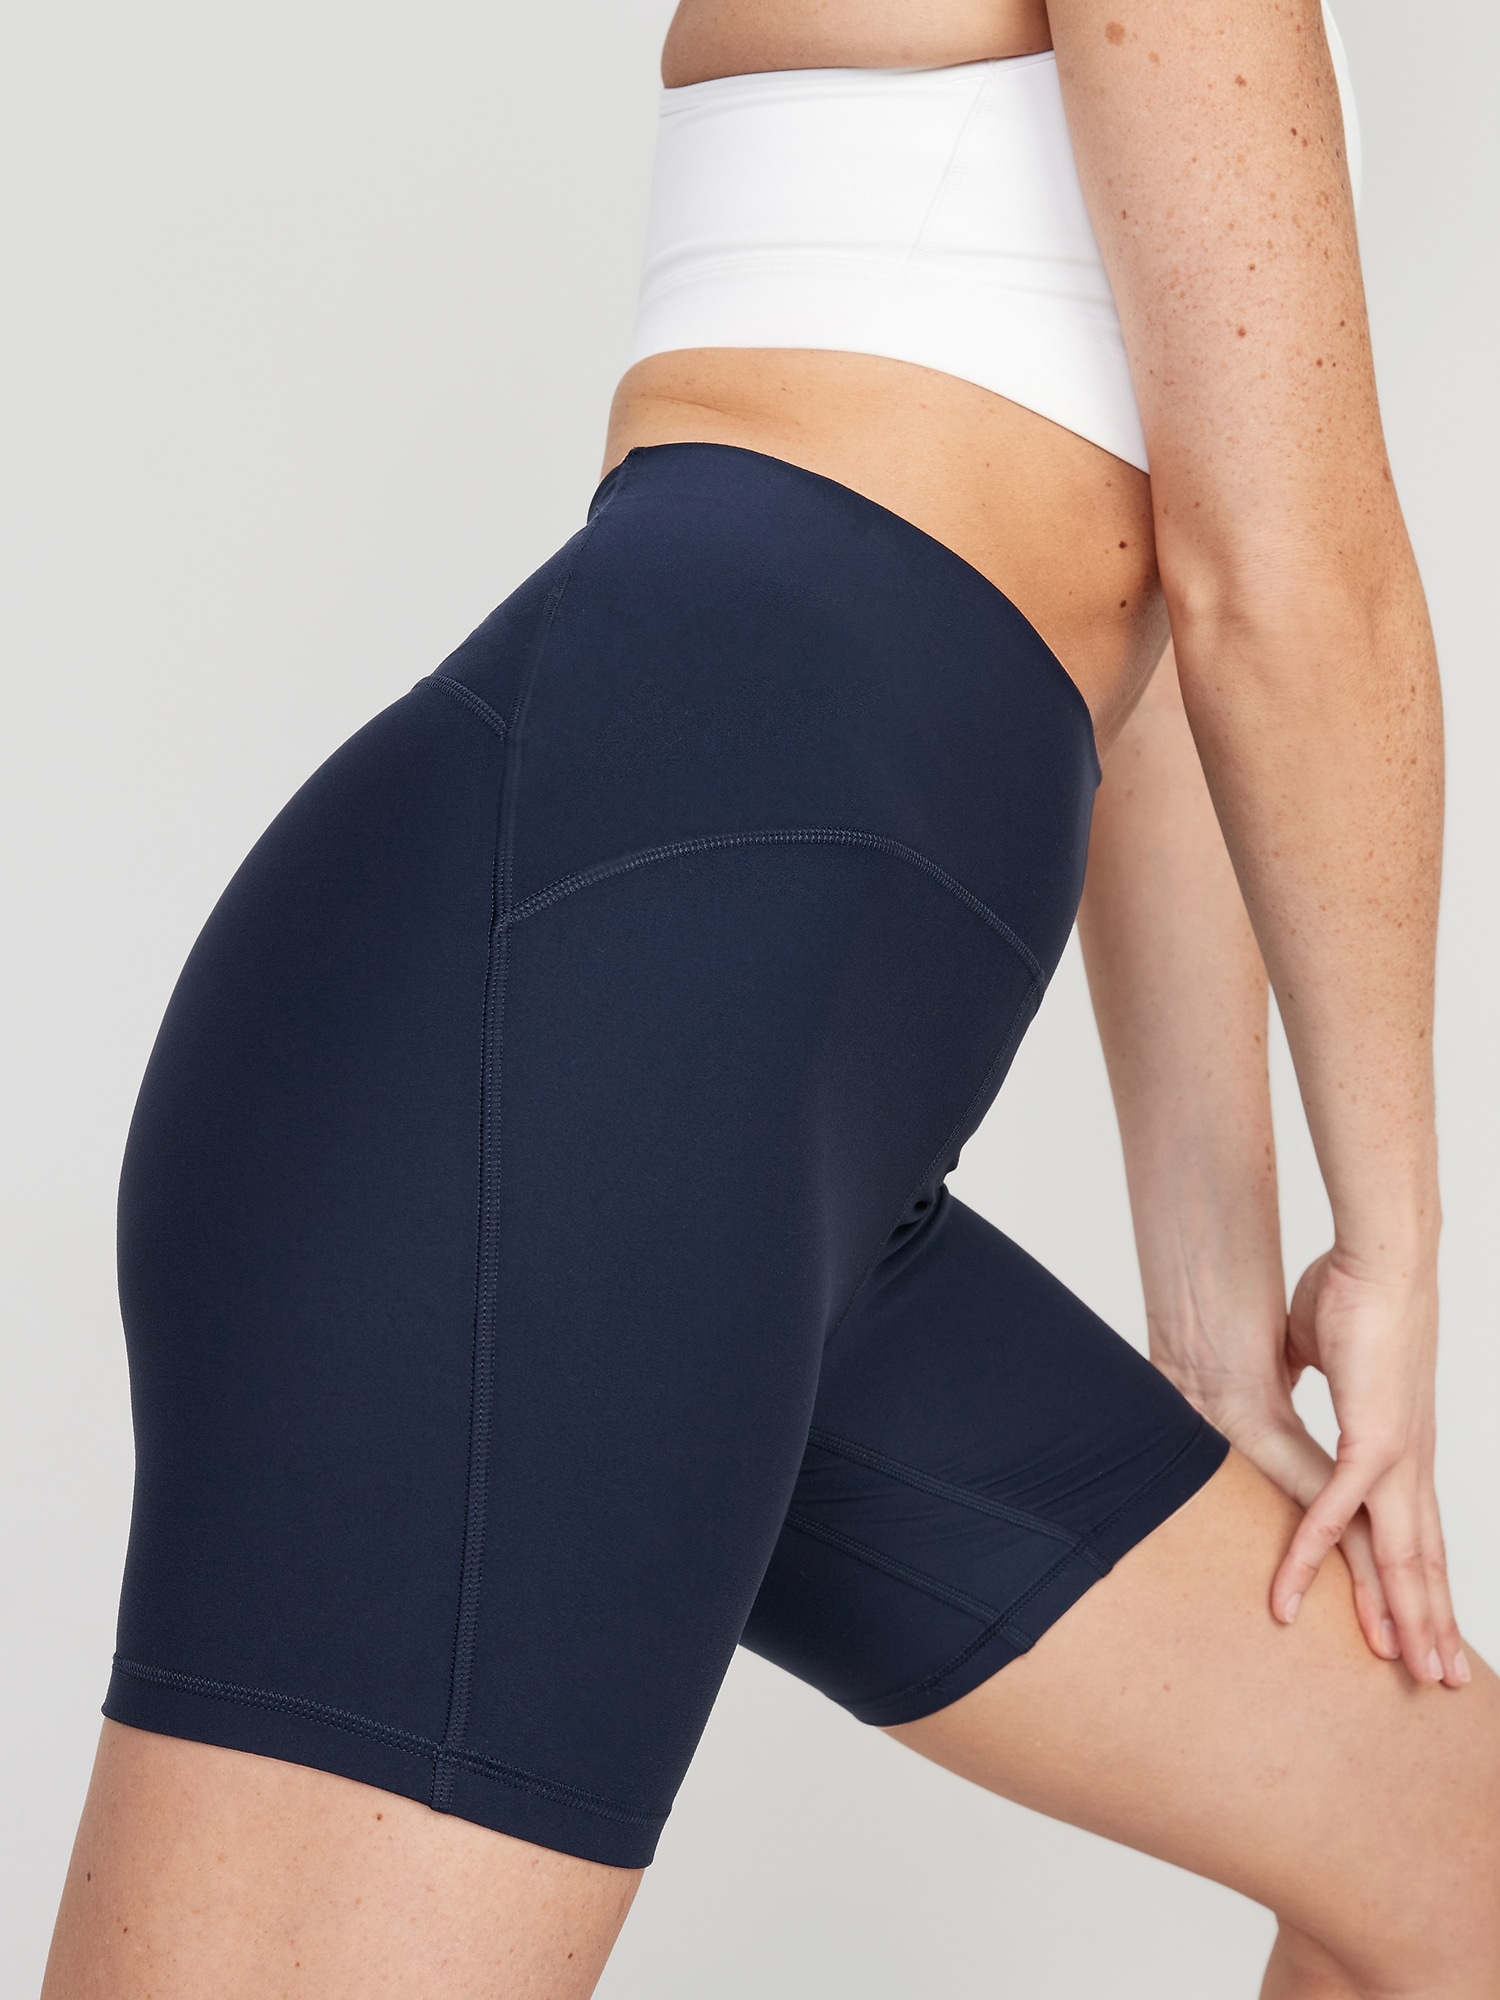 Extra High-Waisted PowerLite Lycra® for Old Navy ADAPTIV 6-inch -- Women inseam | Biker Shorts